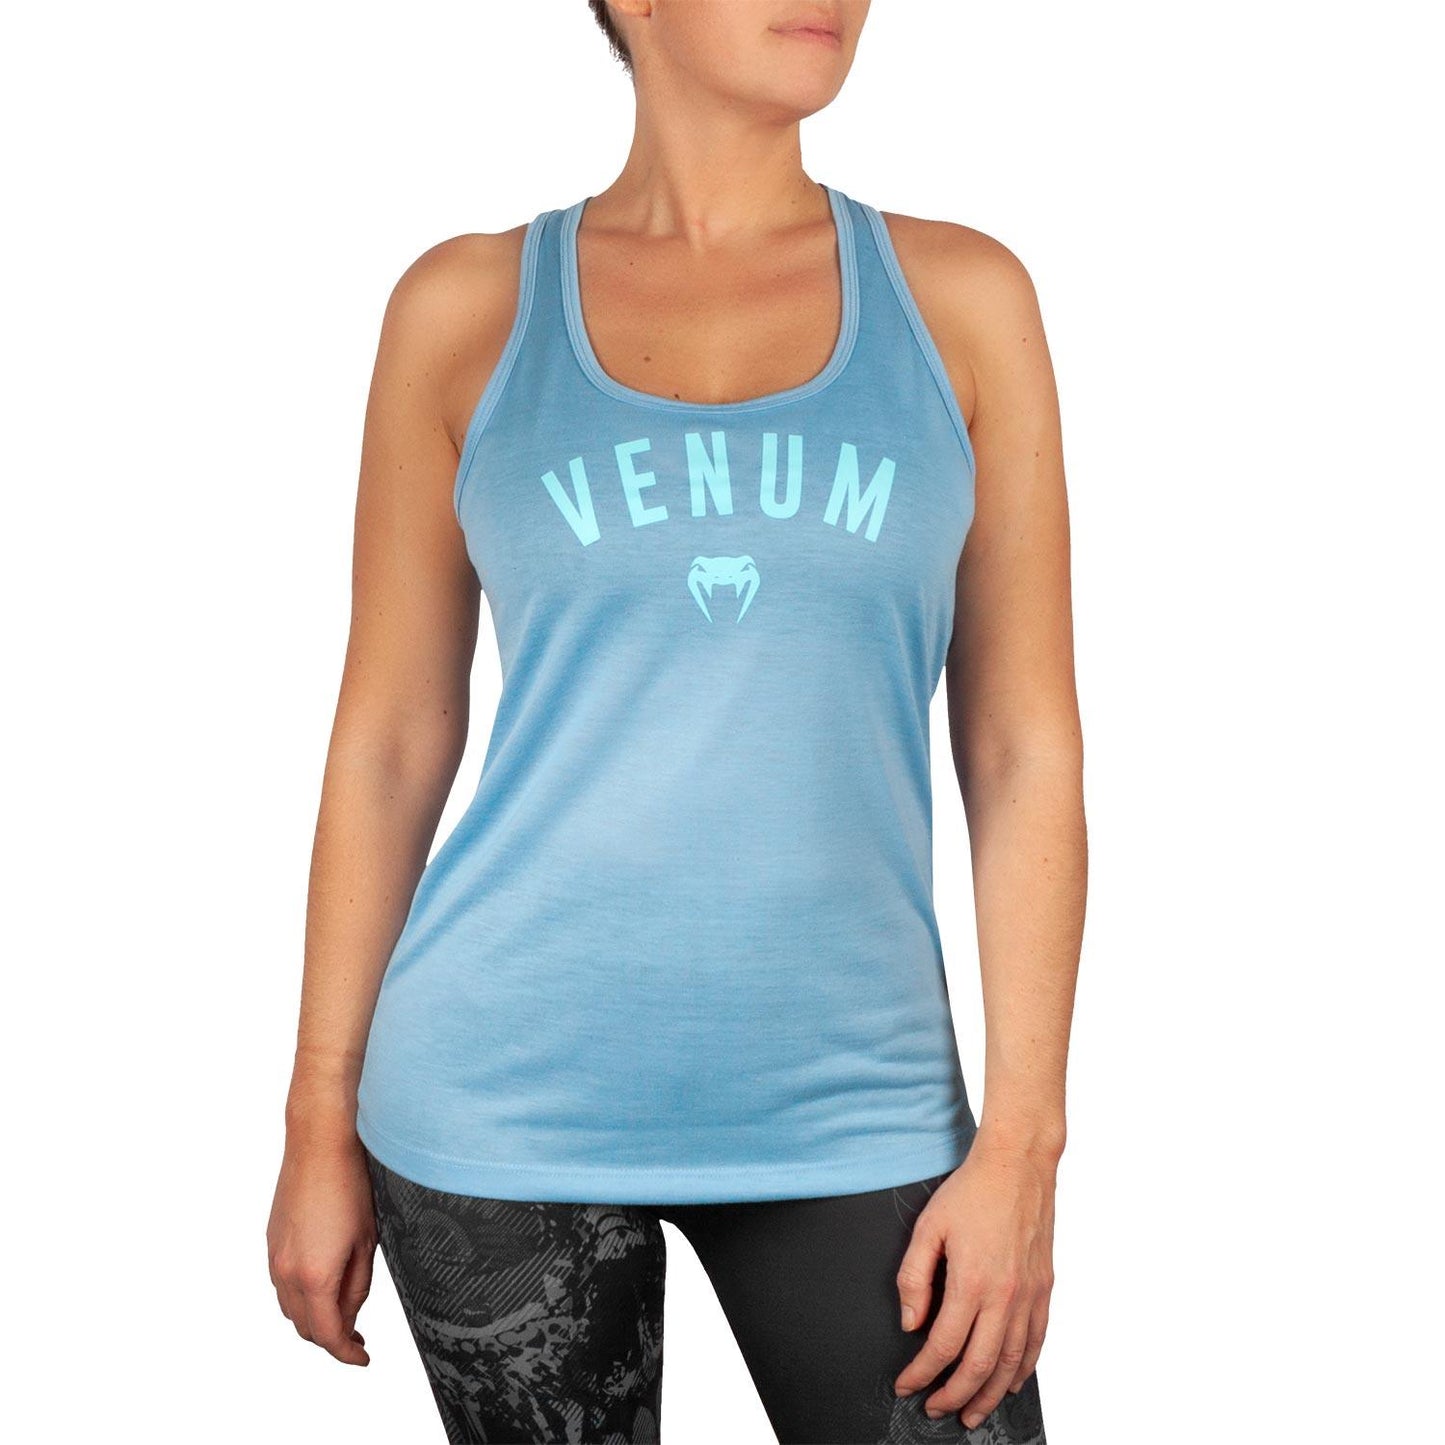 Venum Classic Tank Top - For Women - Light Cyan Picture 1